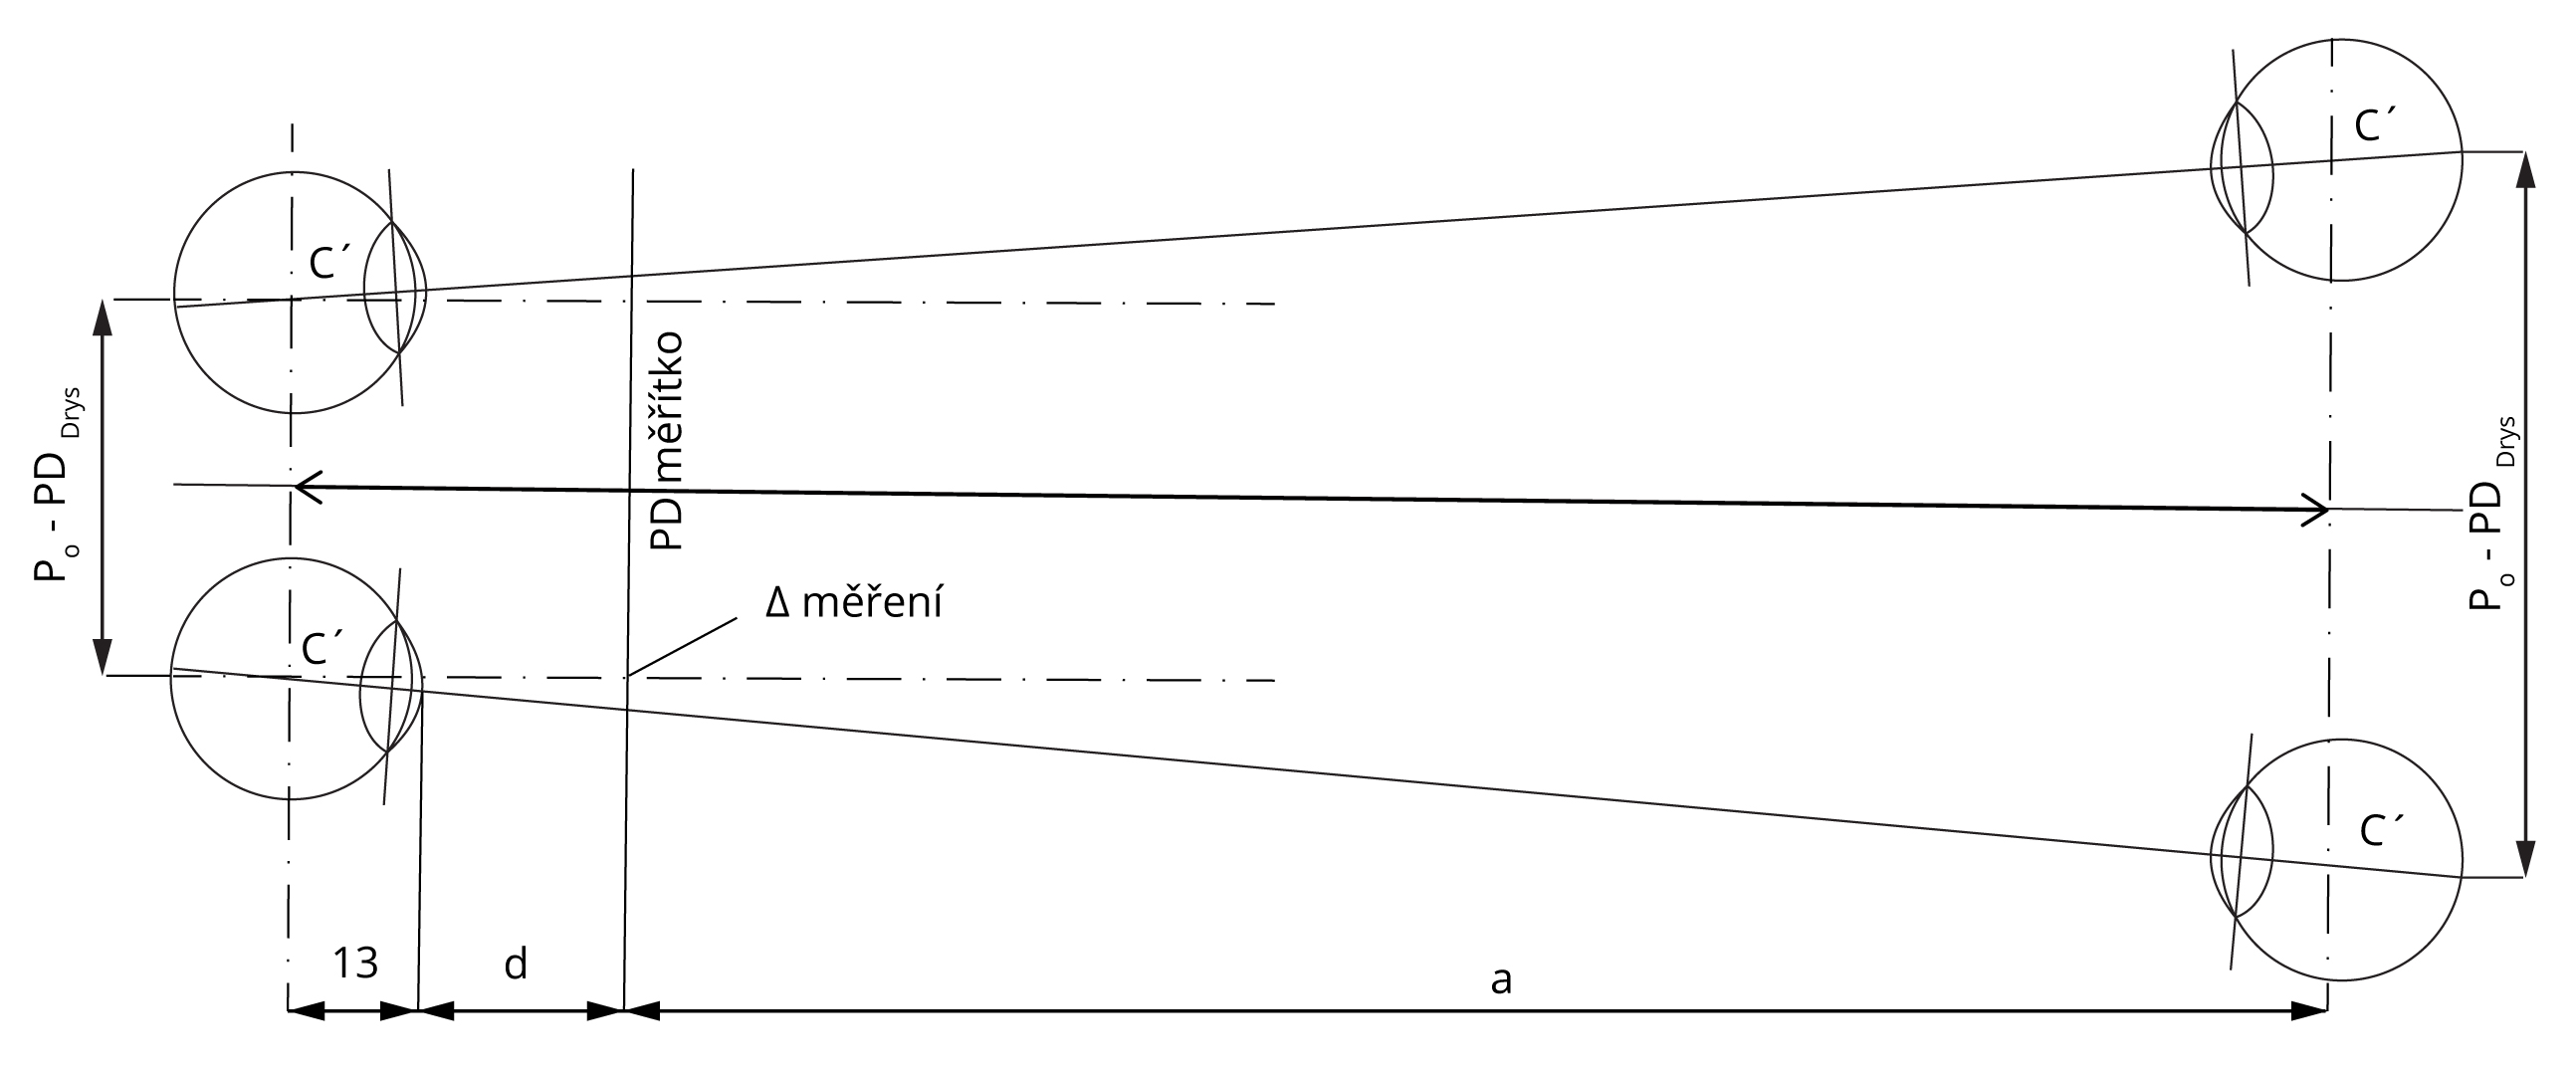 Parallax error calculation in direct method PD measurement